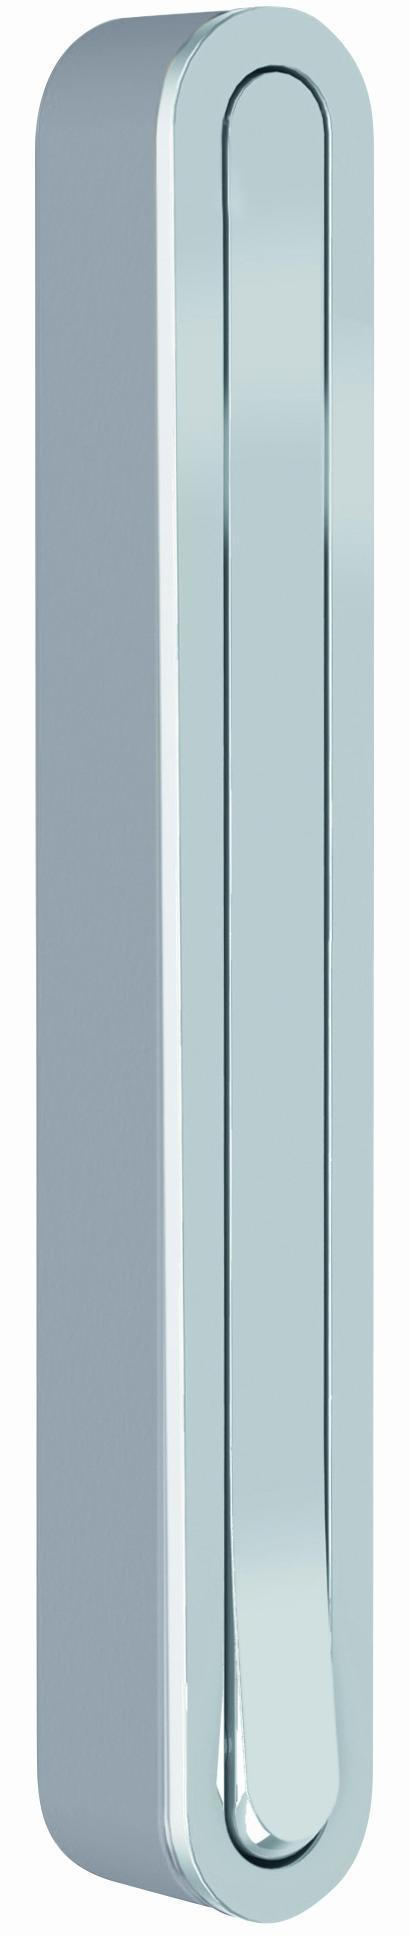 WANDHAKEN Silberfarben  - Silberfarben, Design, Kunststoff/Metall (2,1/16/2,1-15,6cm)